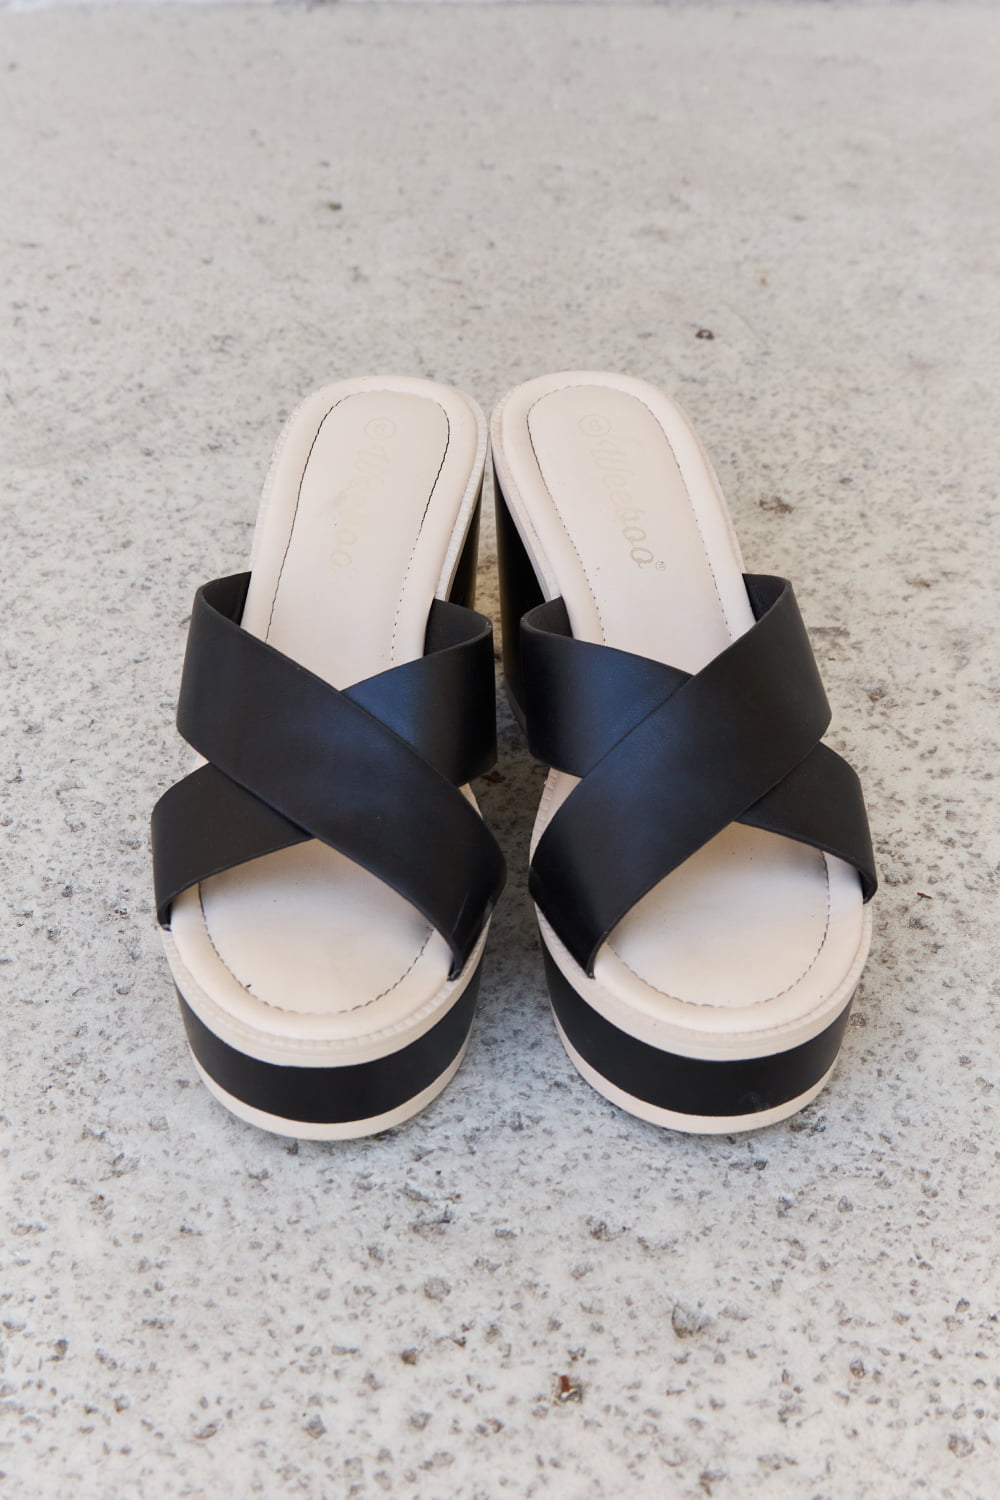 Weeboo Contrast Platform Sandals in Black